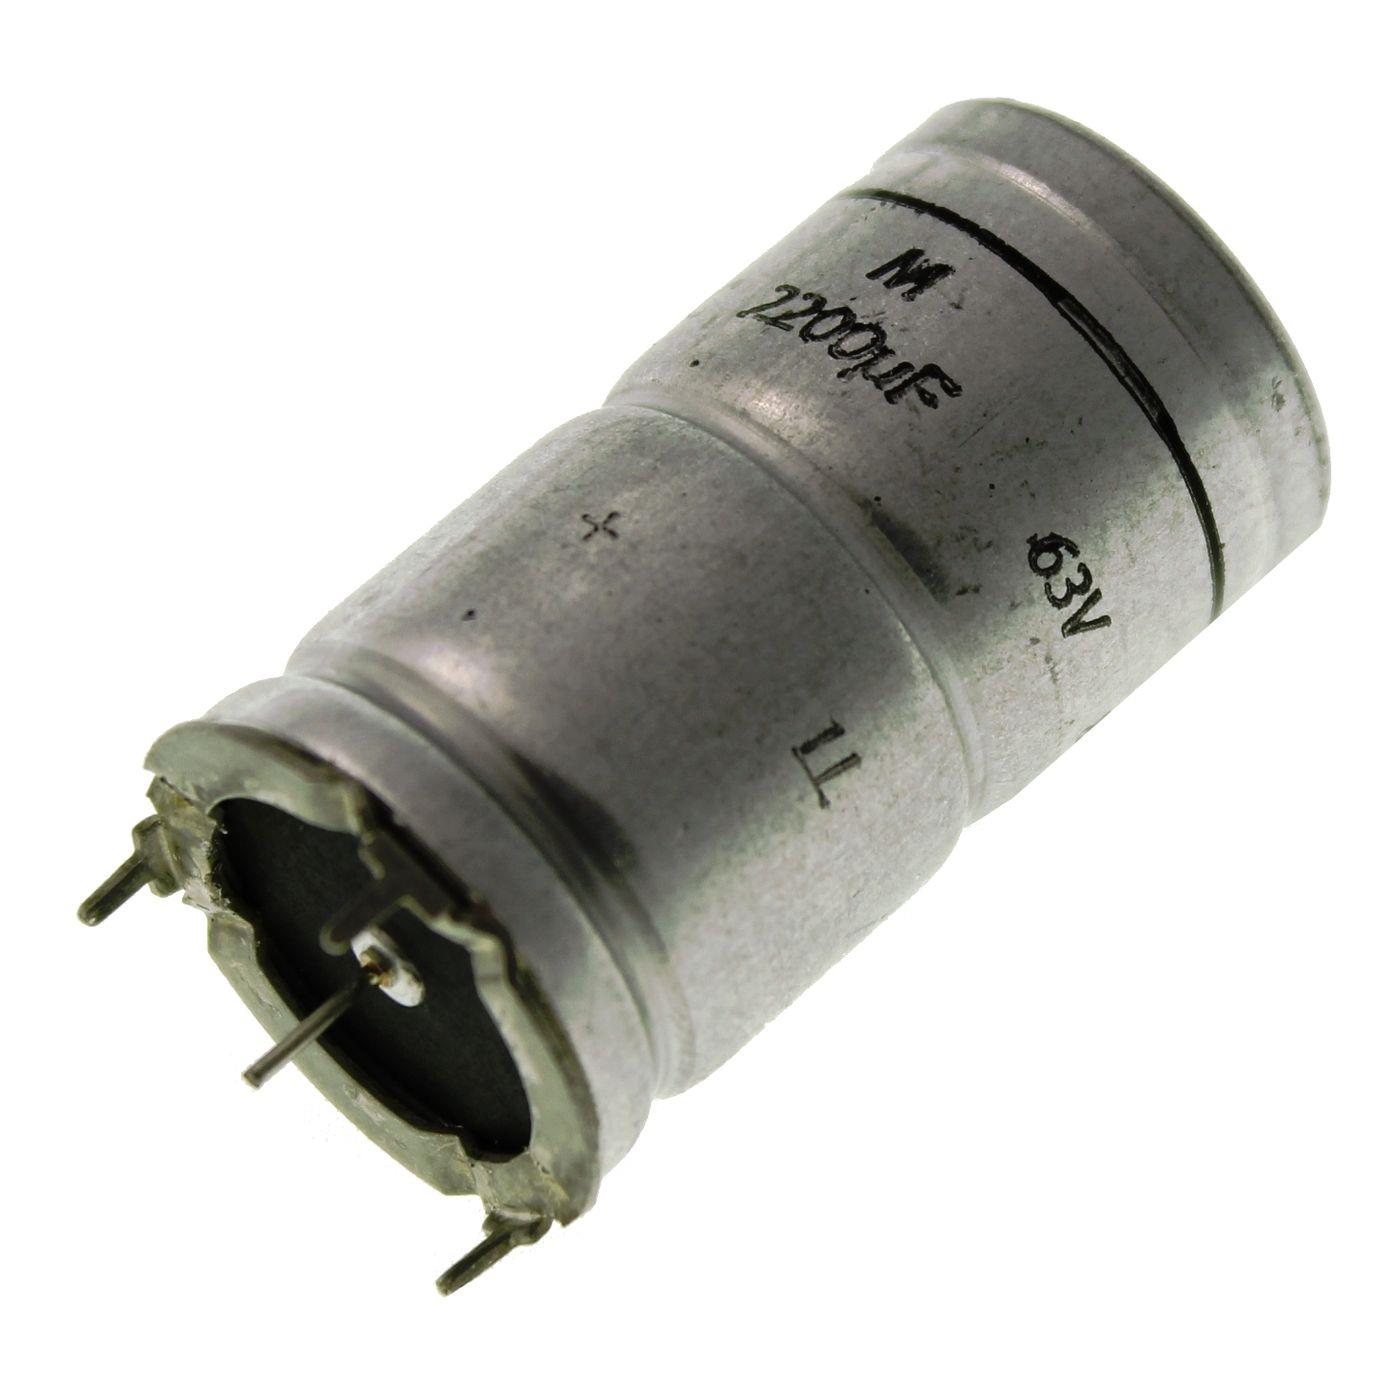 4-Pin Elko Kondensator Radial 2200µF 63V 85°C 222202148222 d21x38mm 2200uF